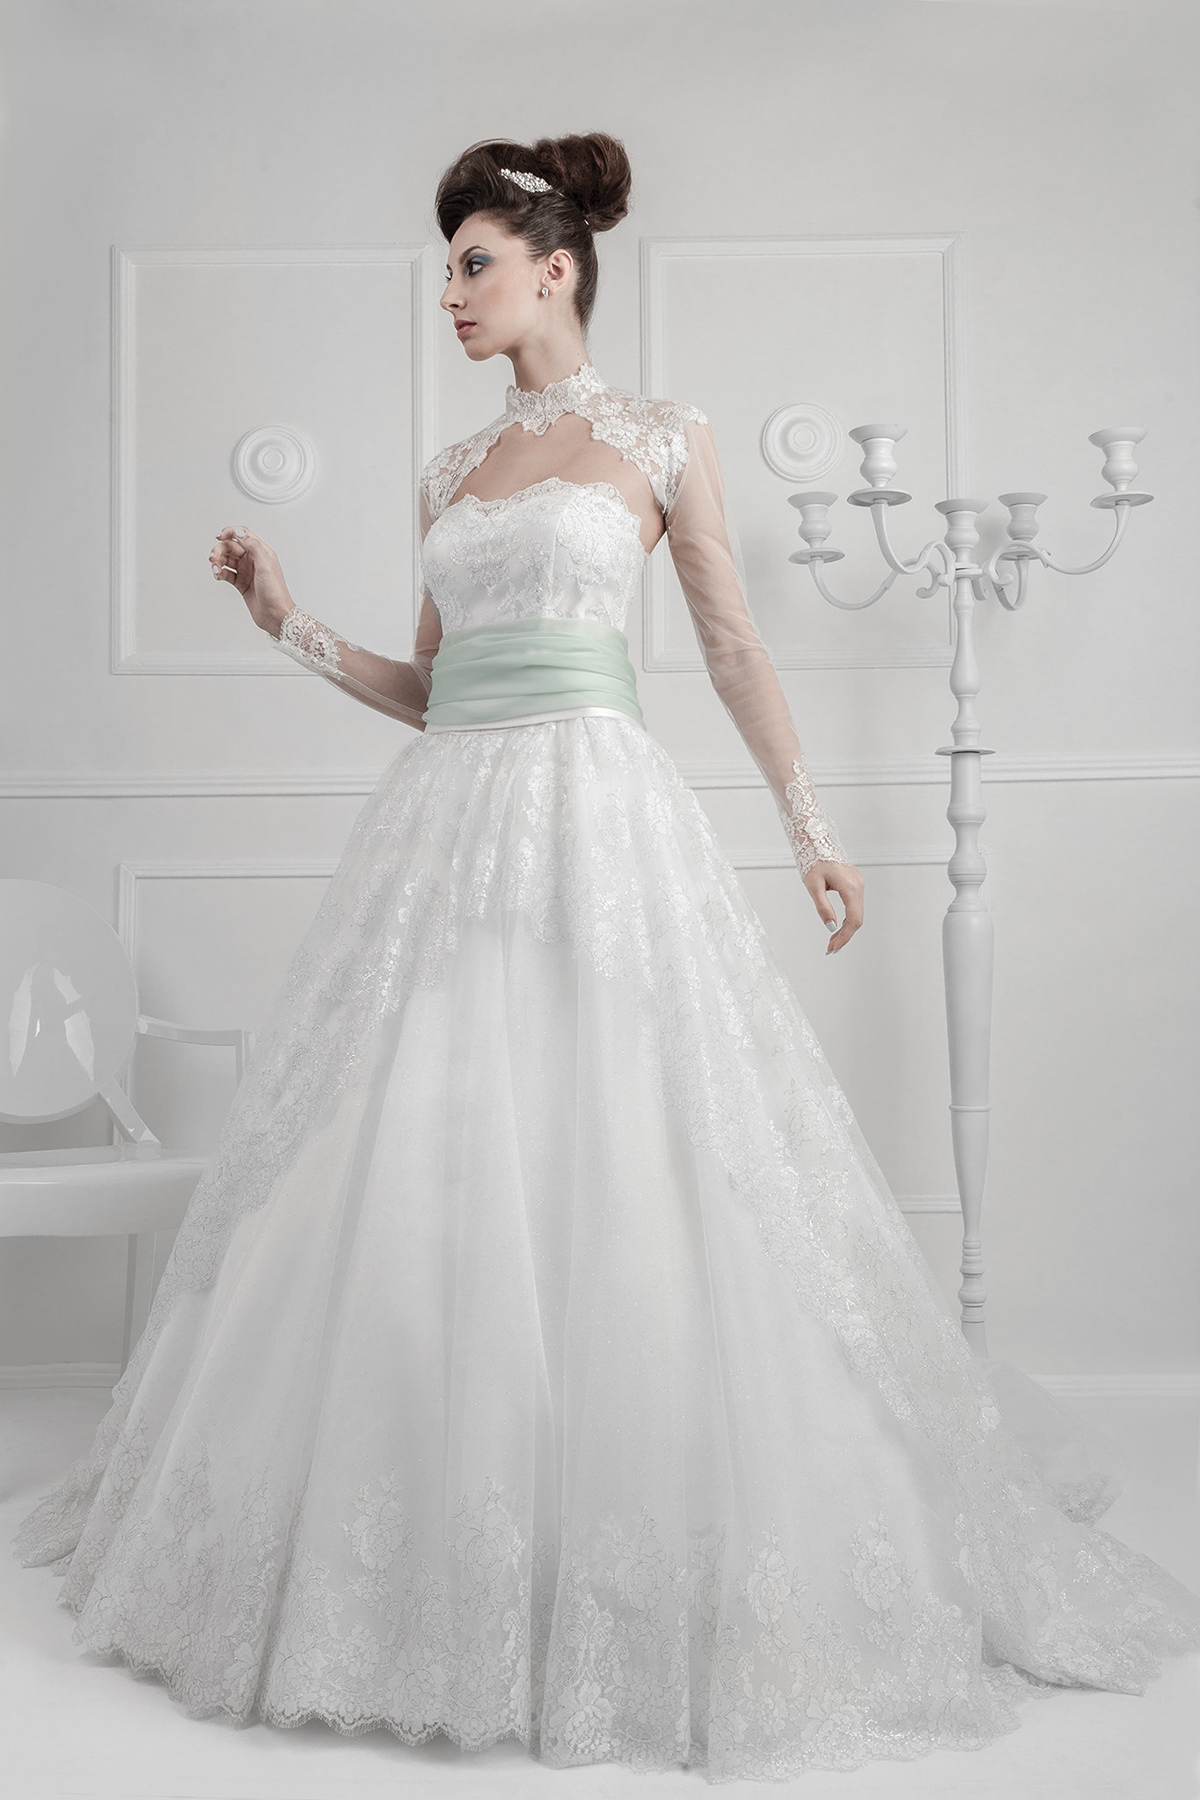 WEDDING DRESS studio model ligt total white wedding